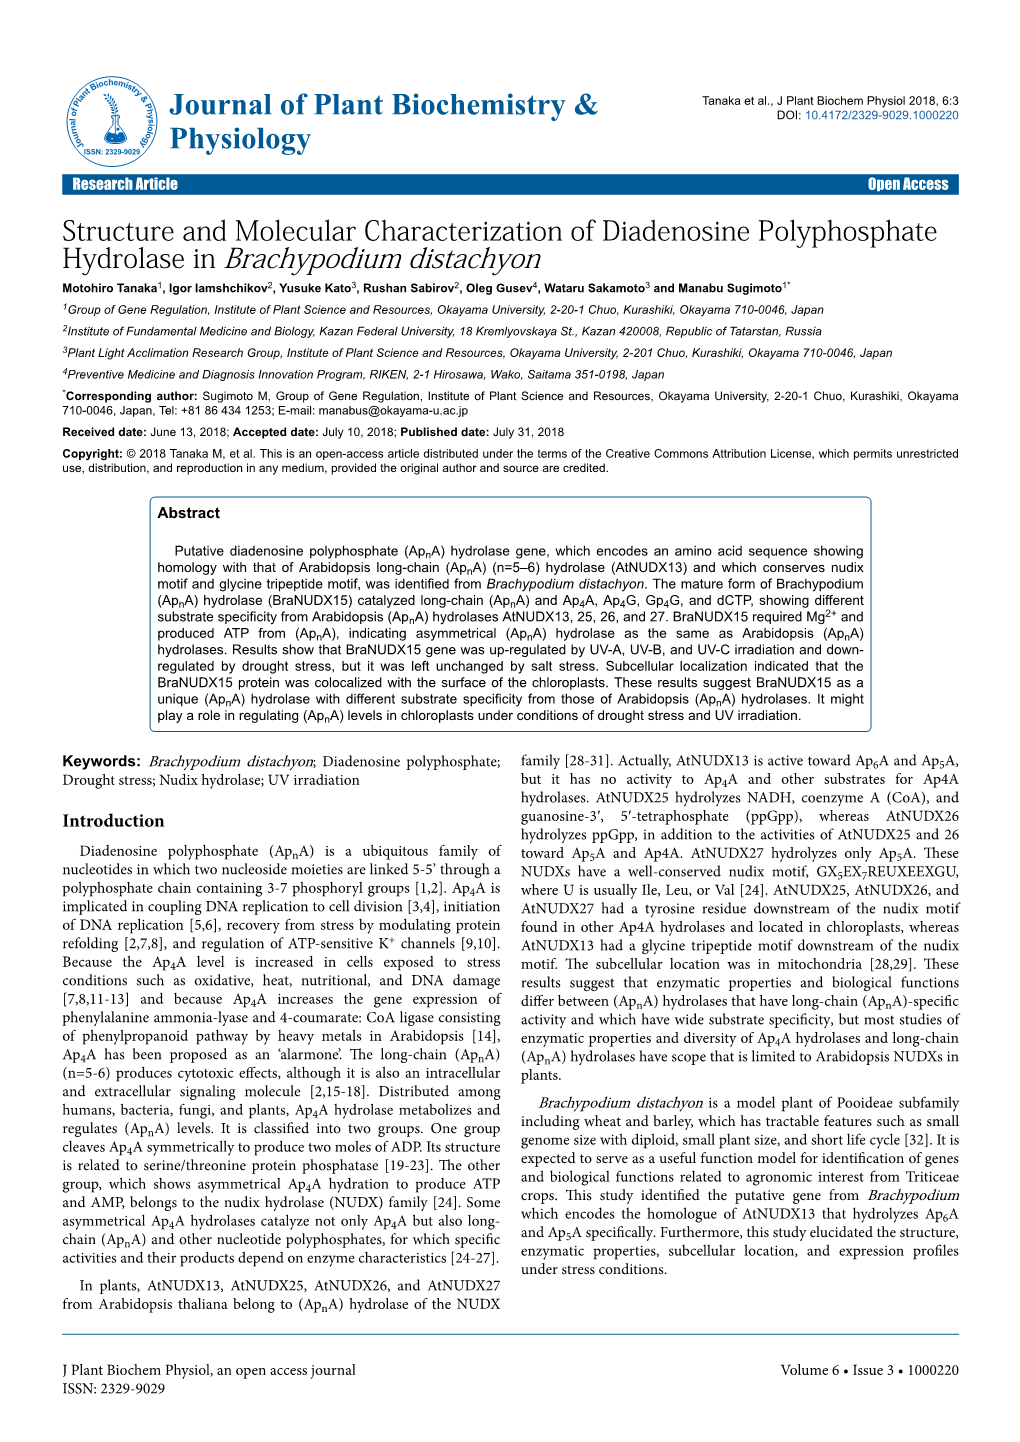 Structure and Molecular Characterization of Diadenosine